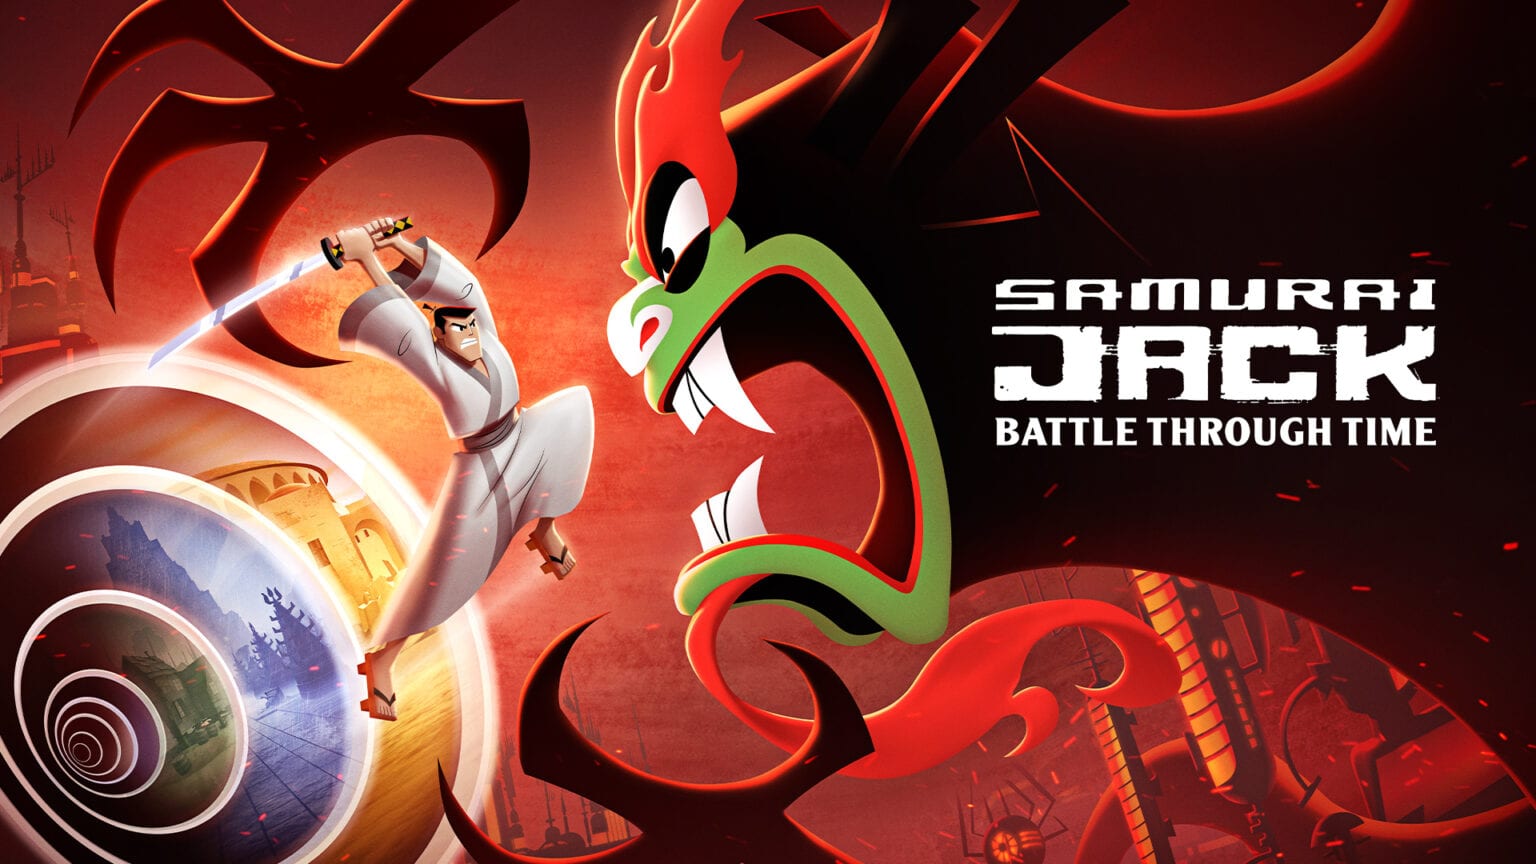 ‘Samurai Jack: Battle Through Time’ will launch on Apple Arcade soon